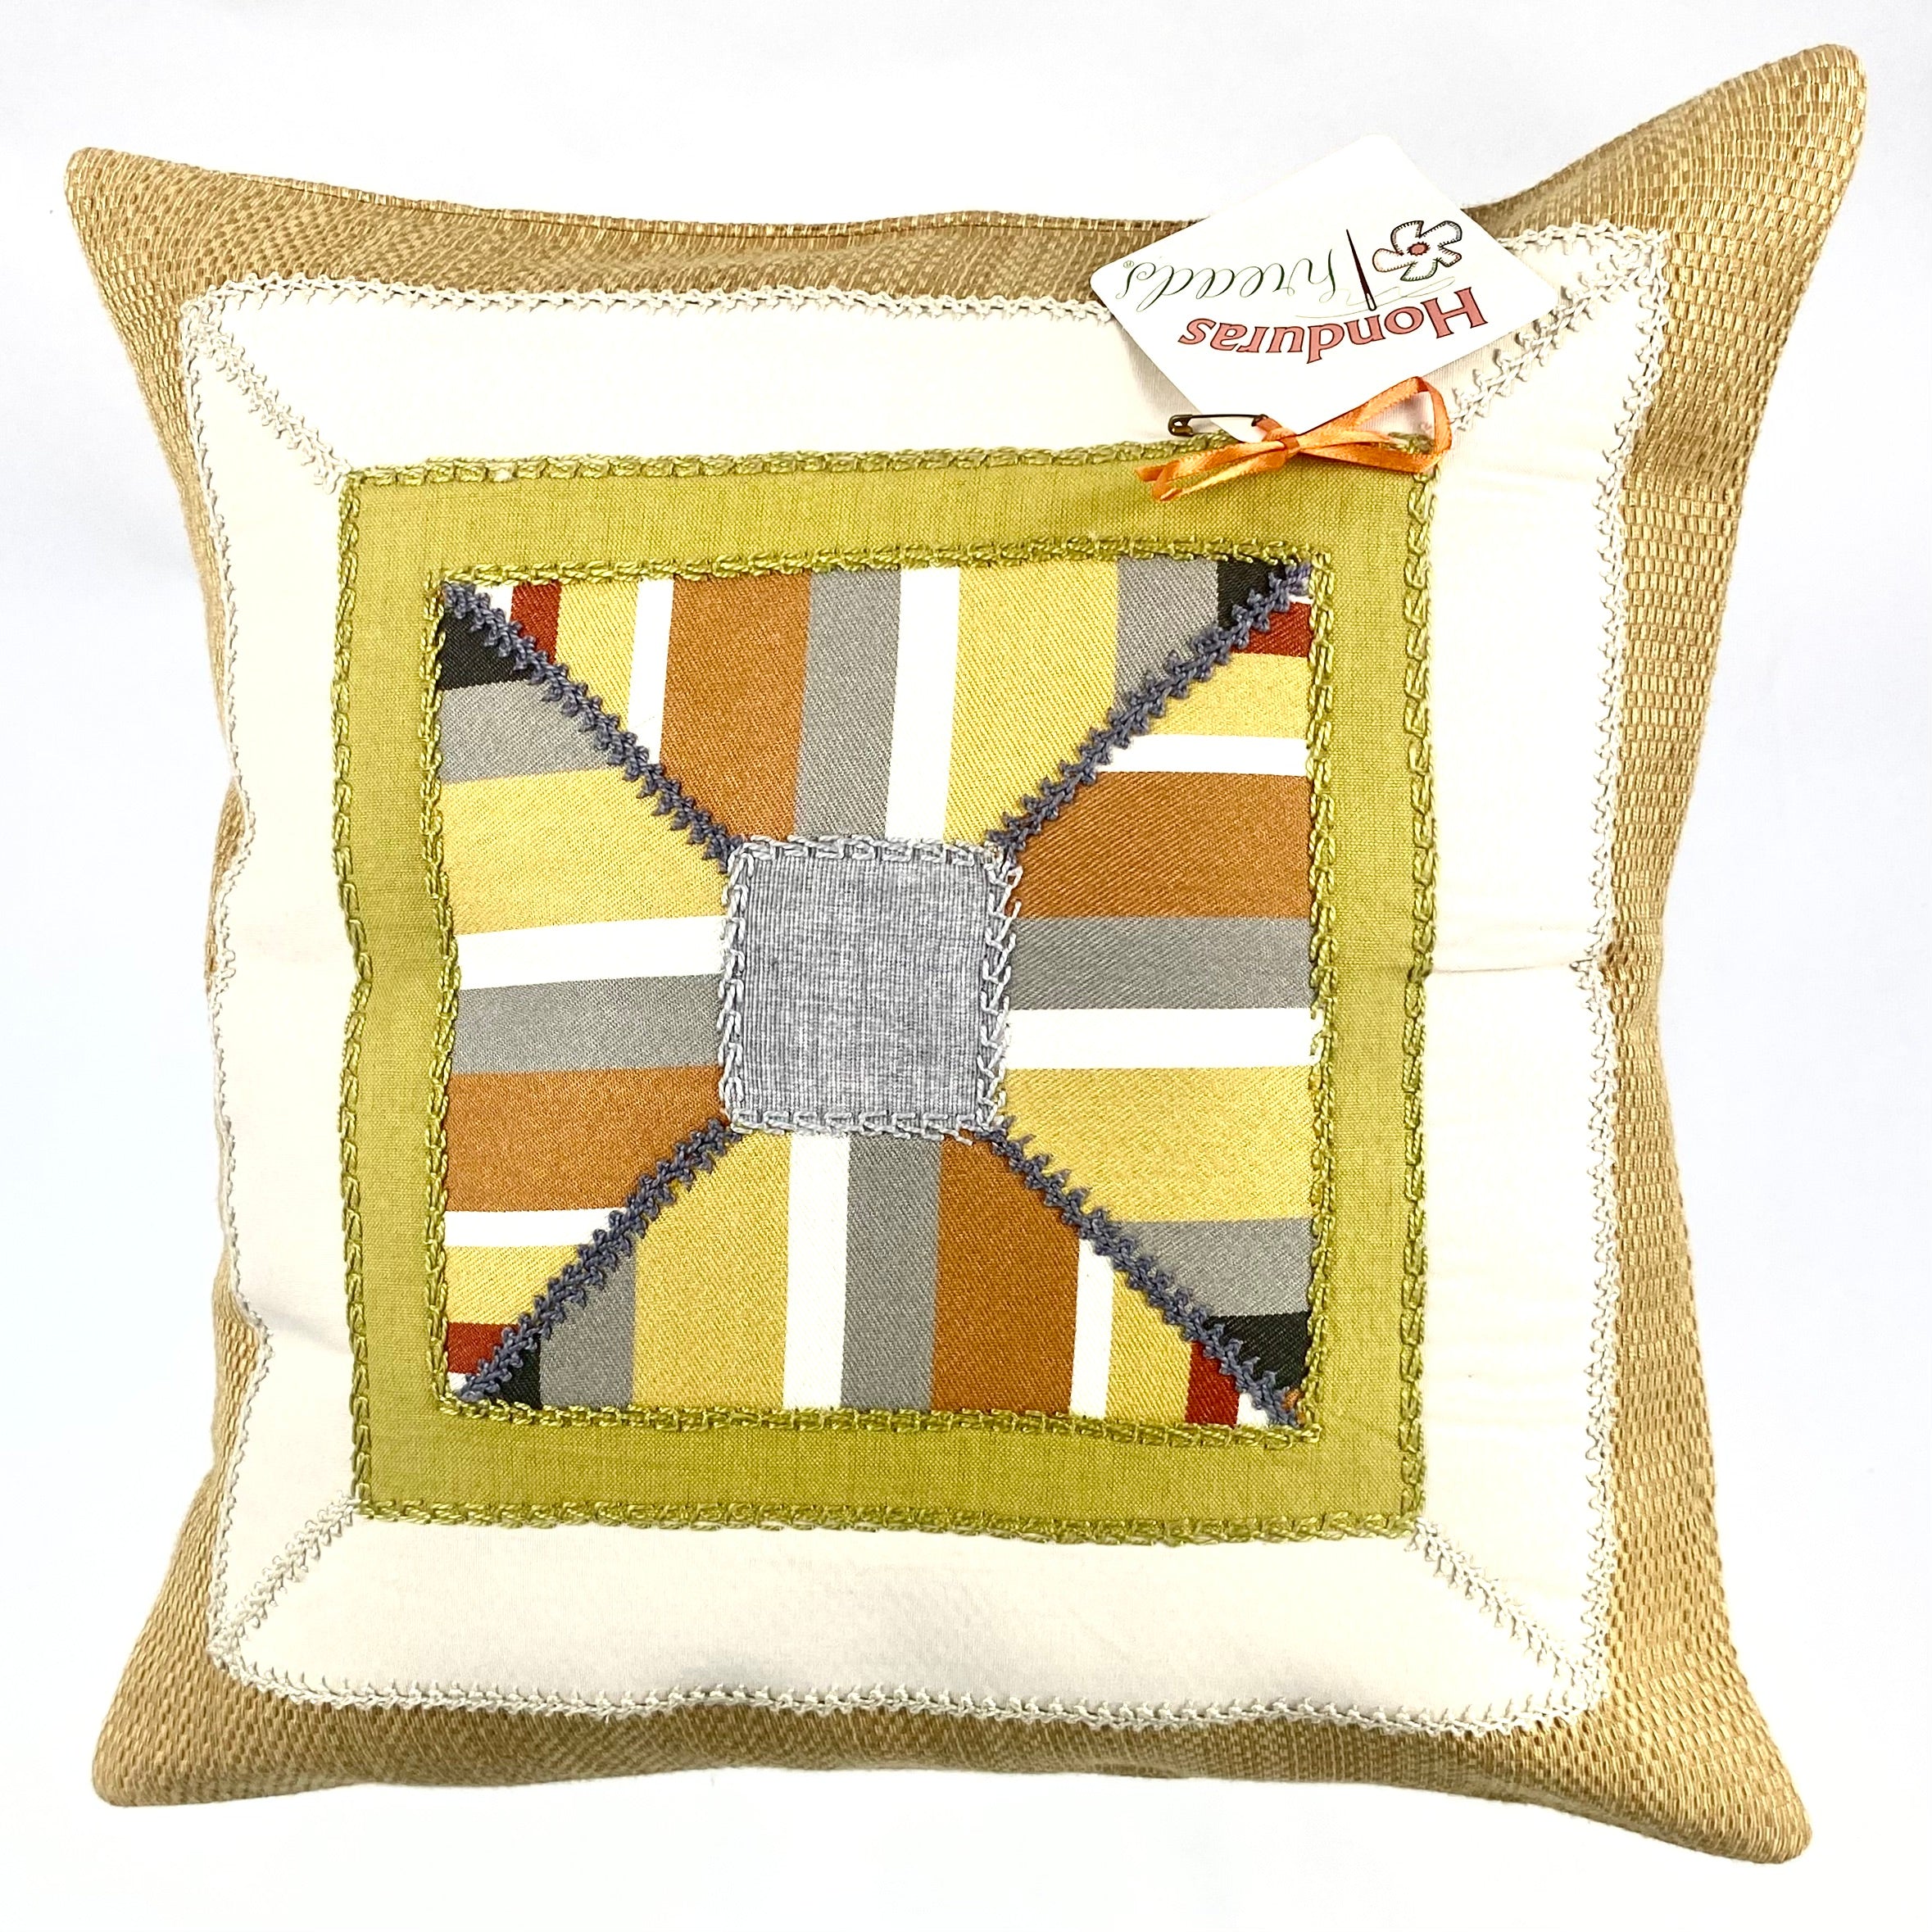 De Colores Design Embroidered Pillow on brown Honduras Threads